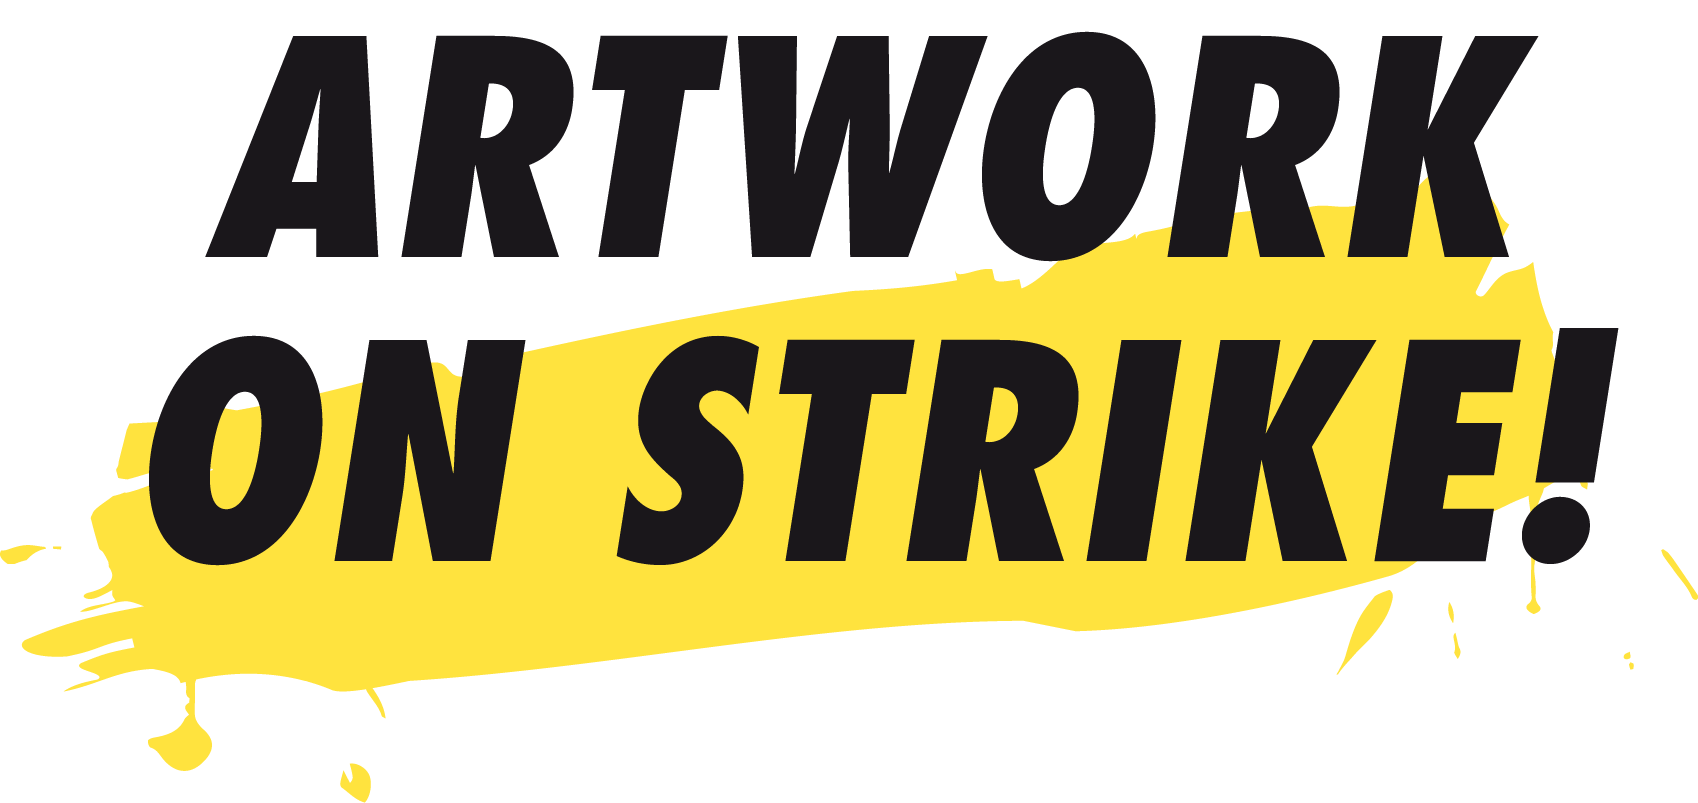 Artwork On Strike!